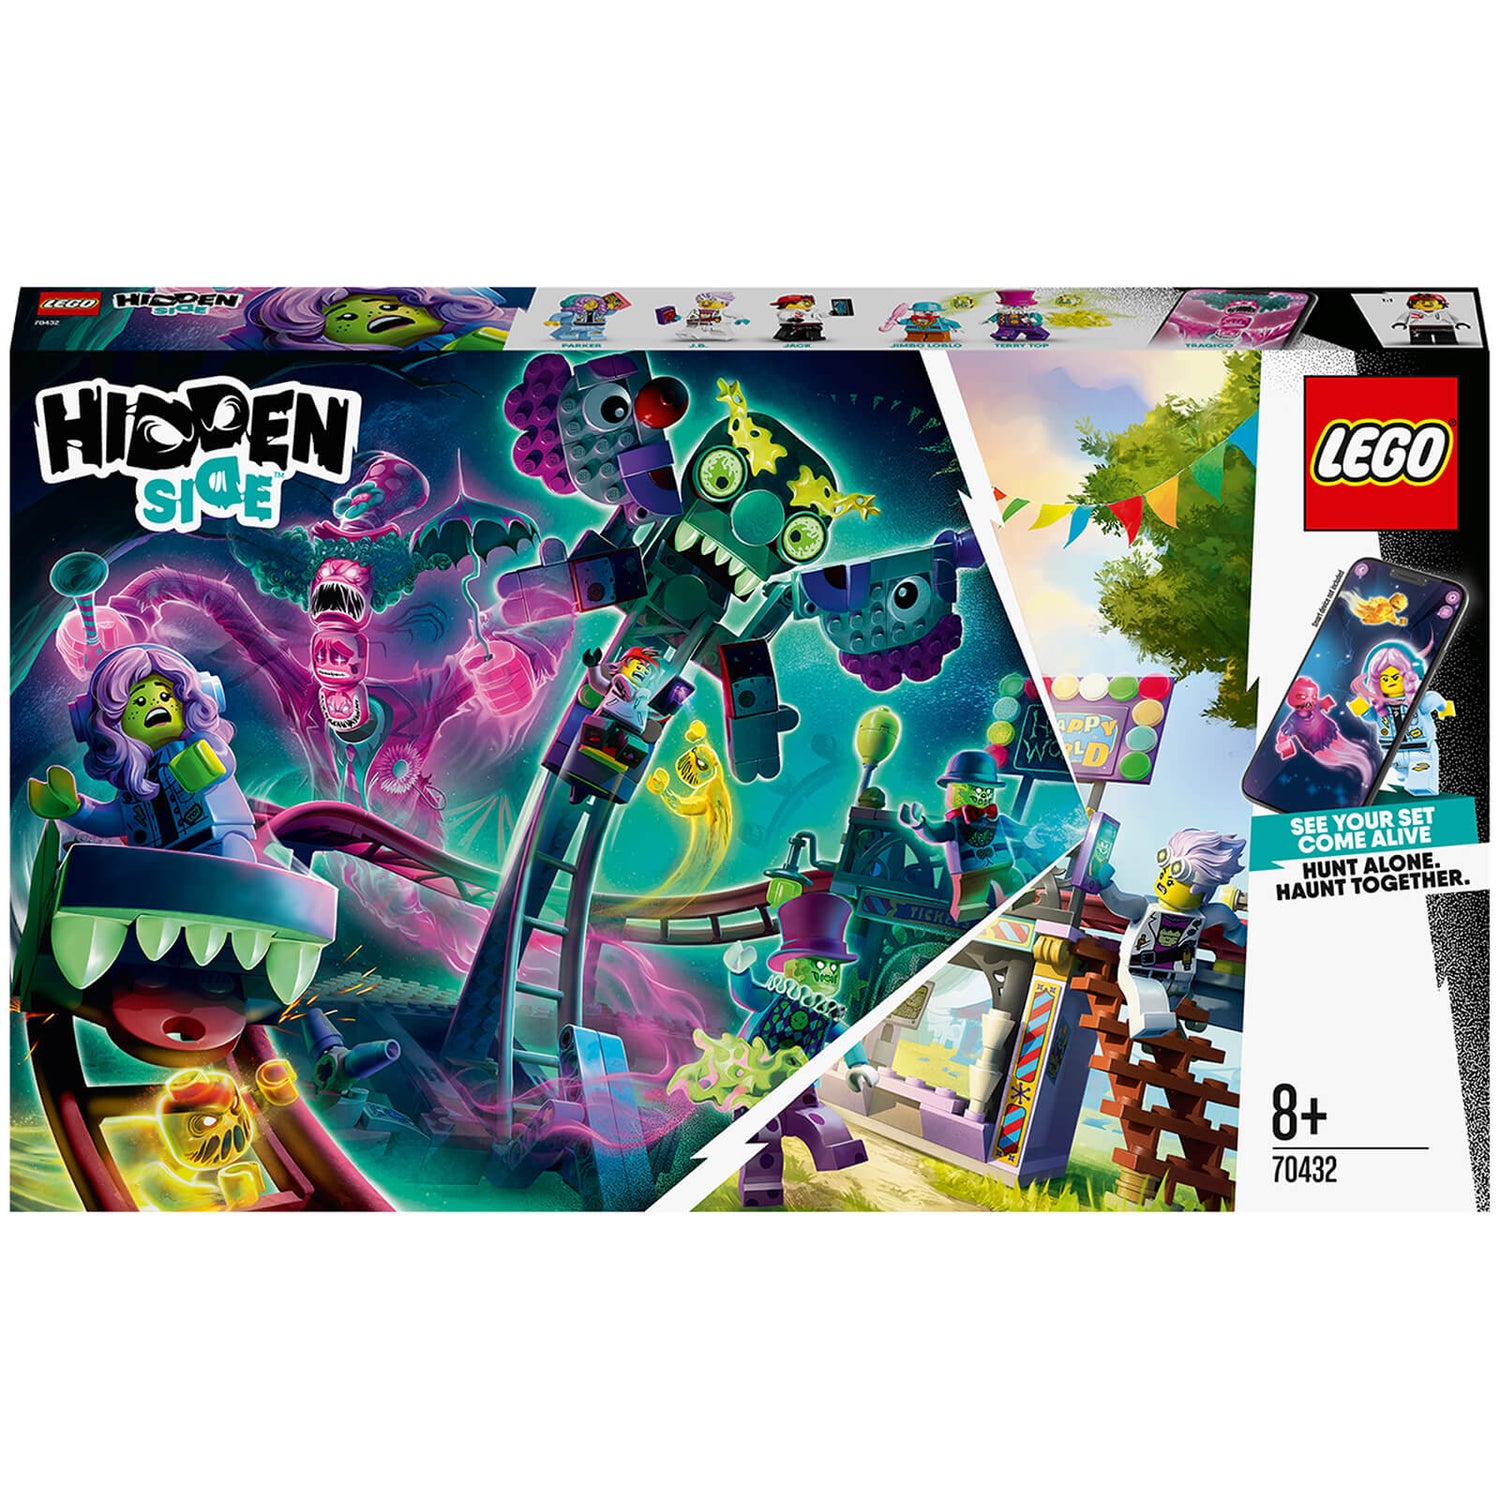 LEGO Hidden Side: Haunted Fairground AR Games App (70432) Toys - Zavvi US